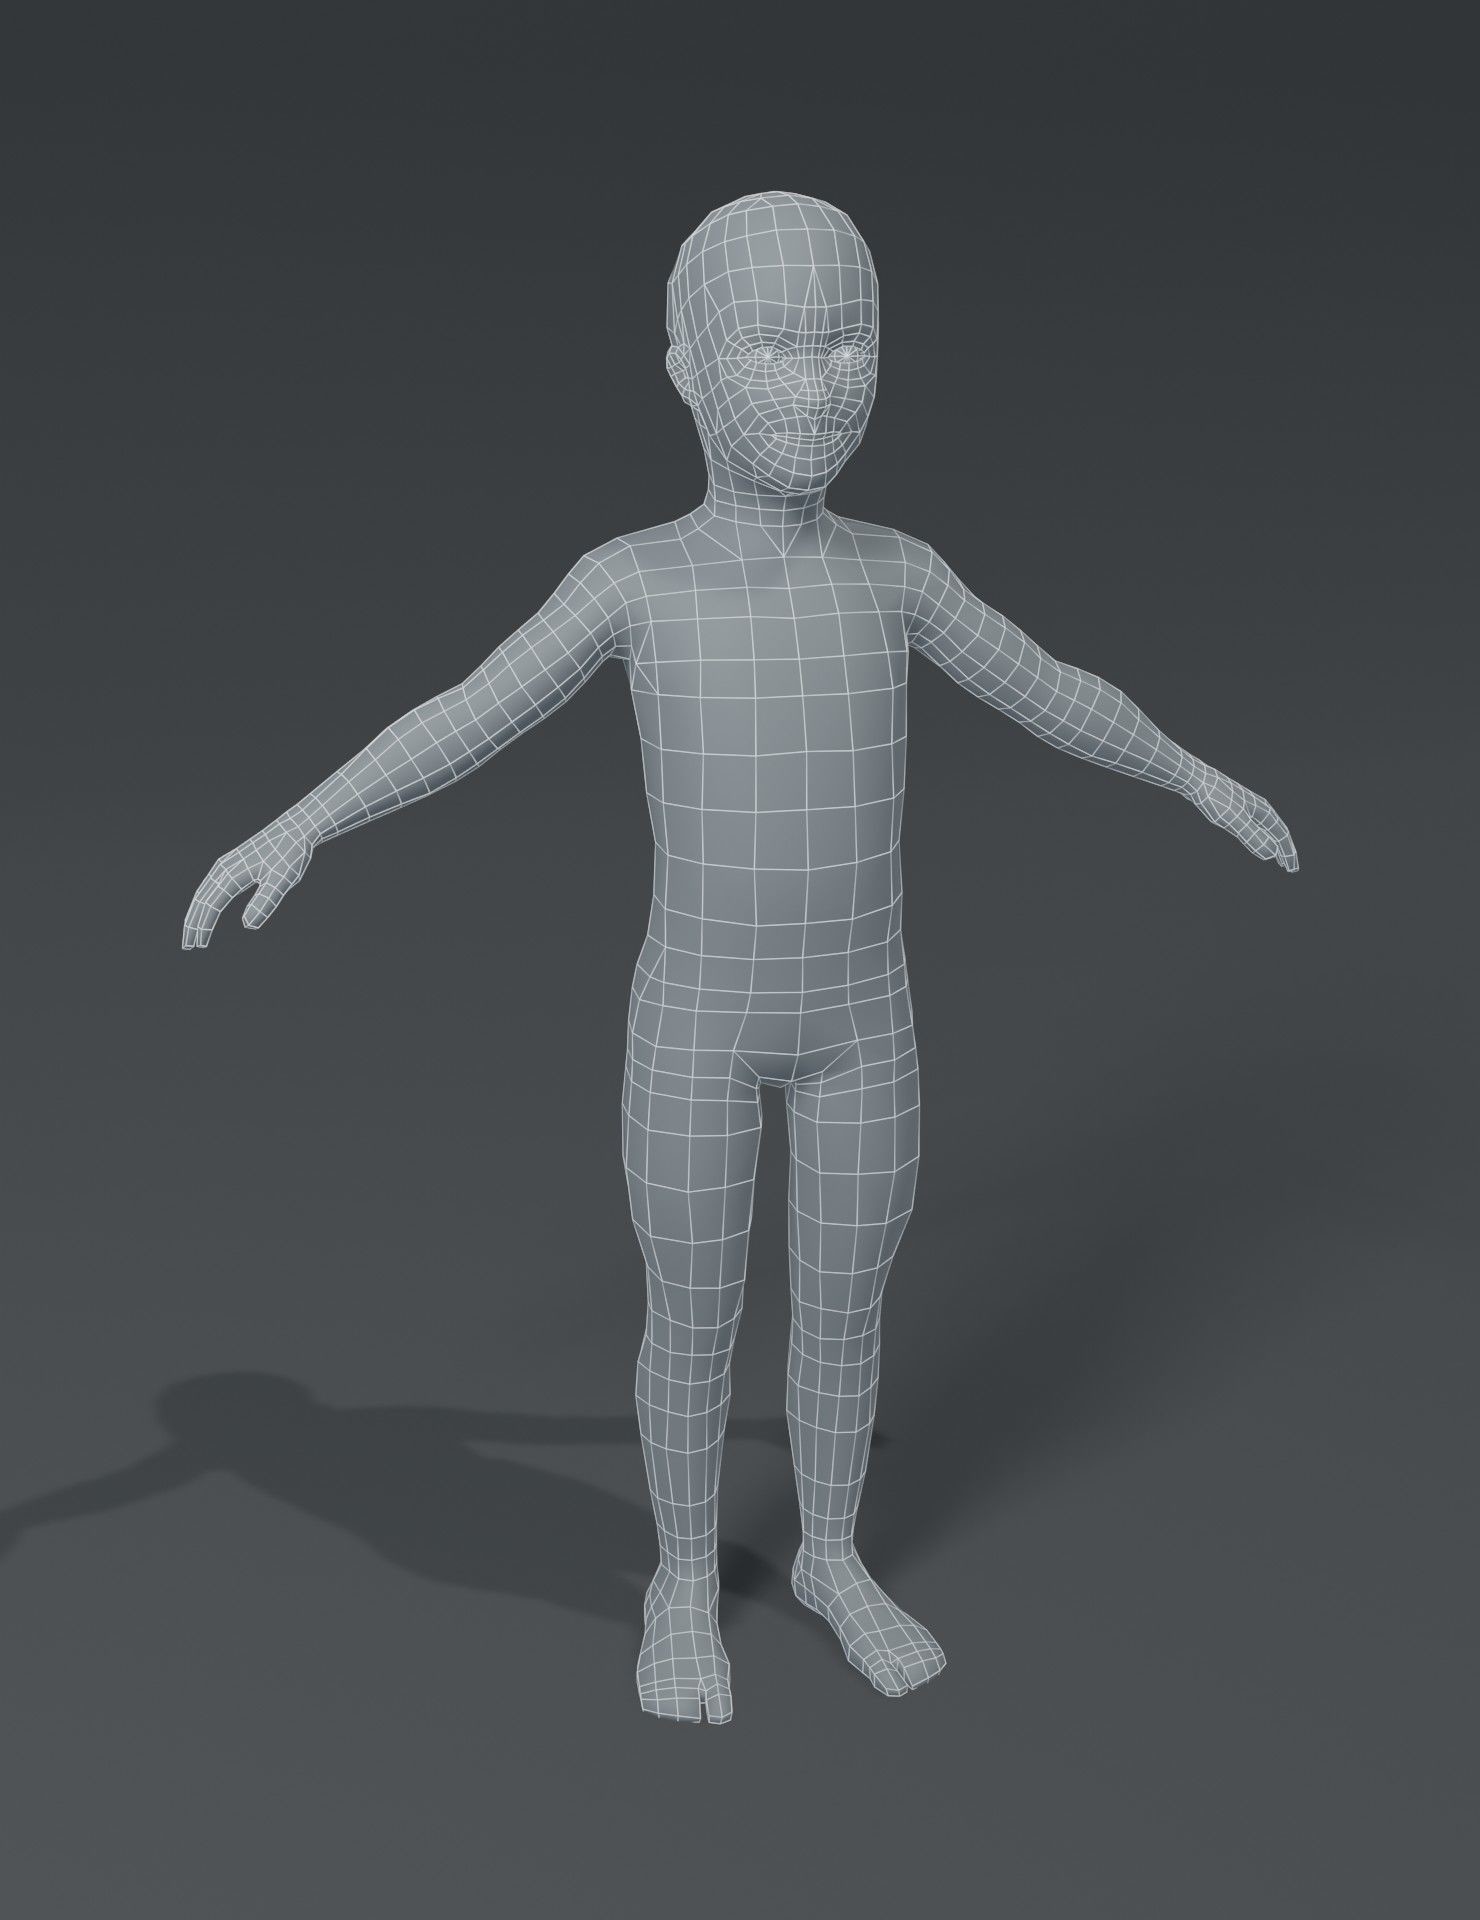 Human 3D Model Free Download Step